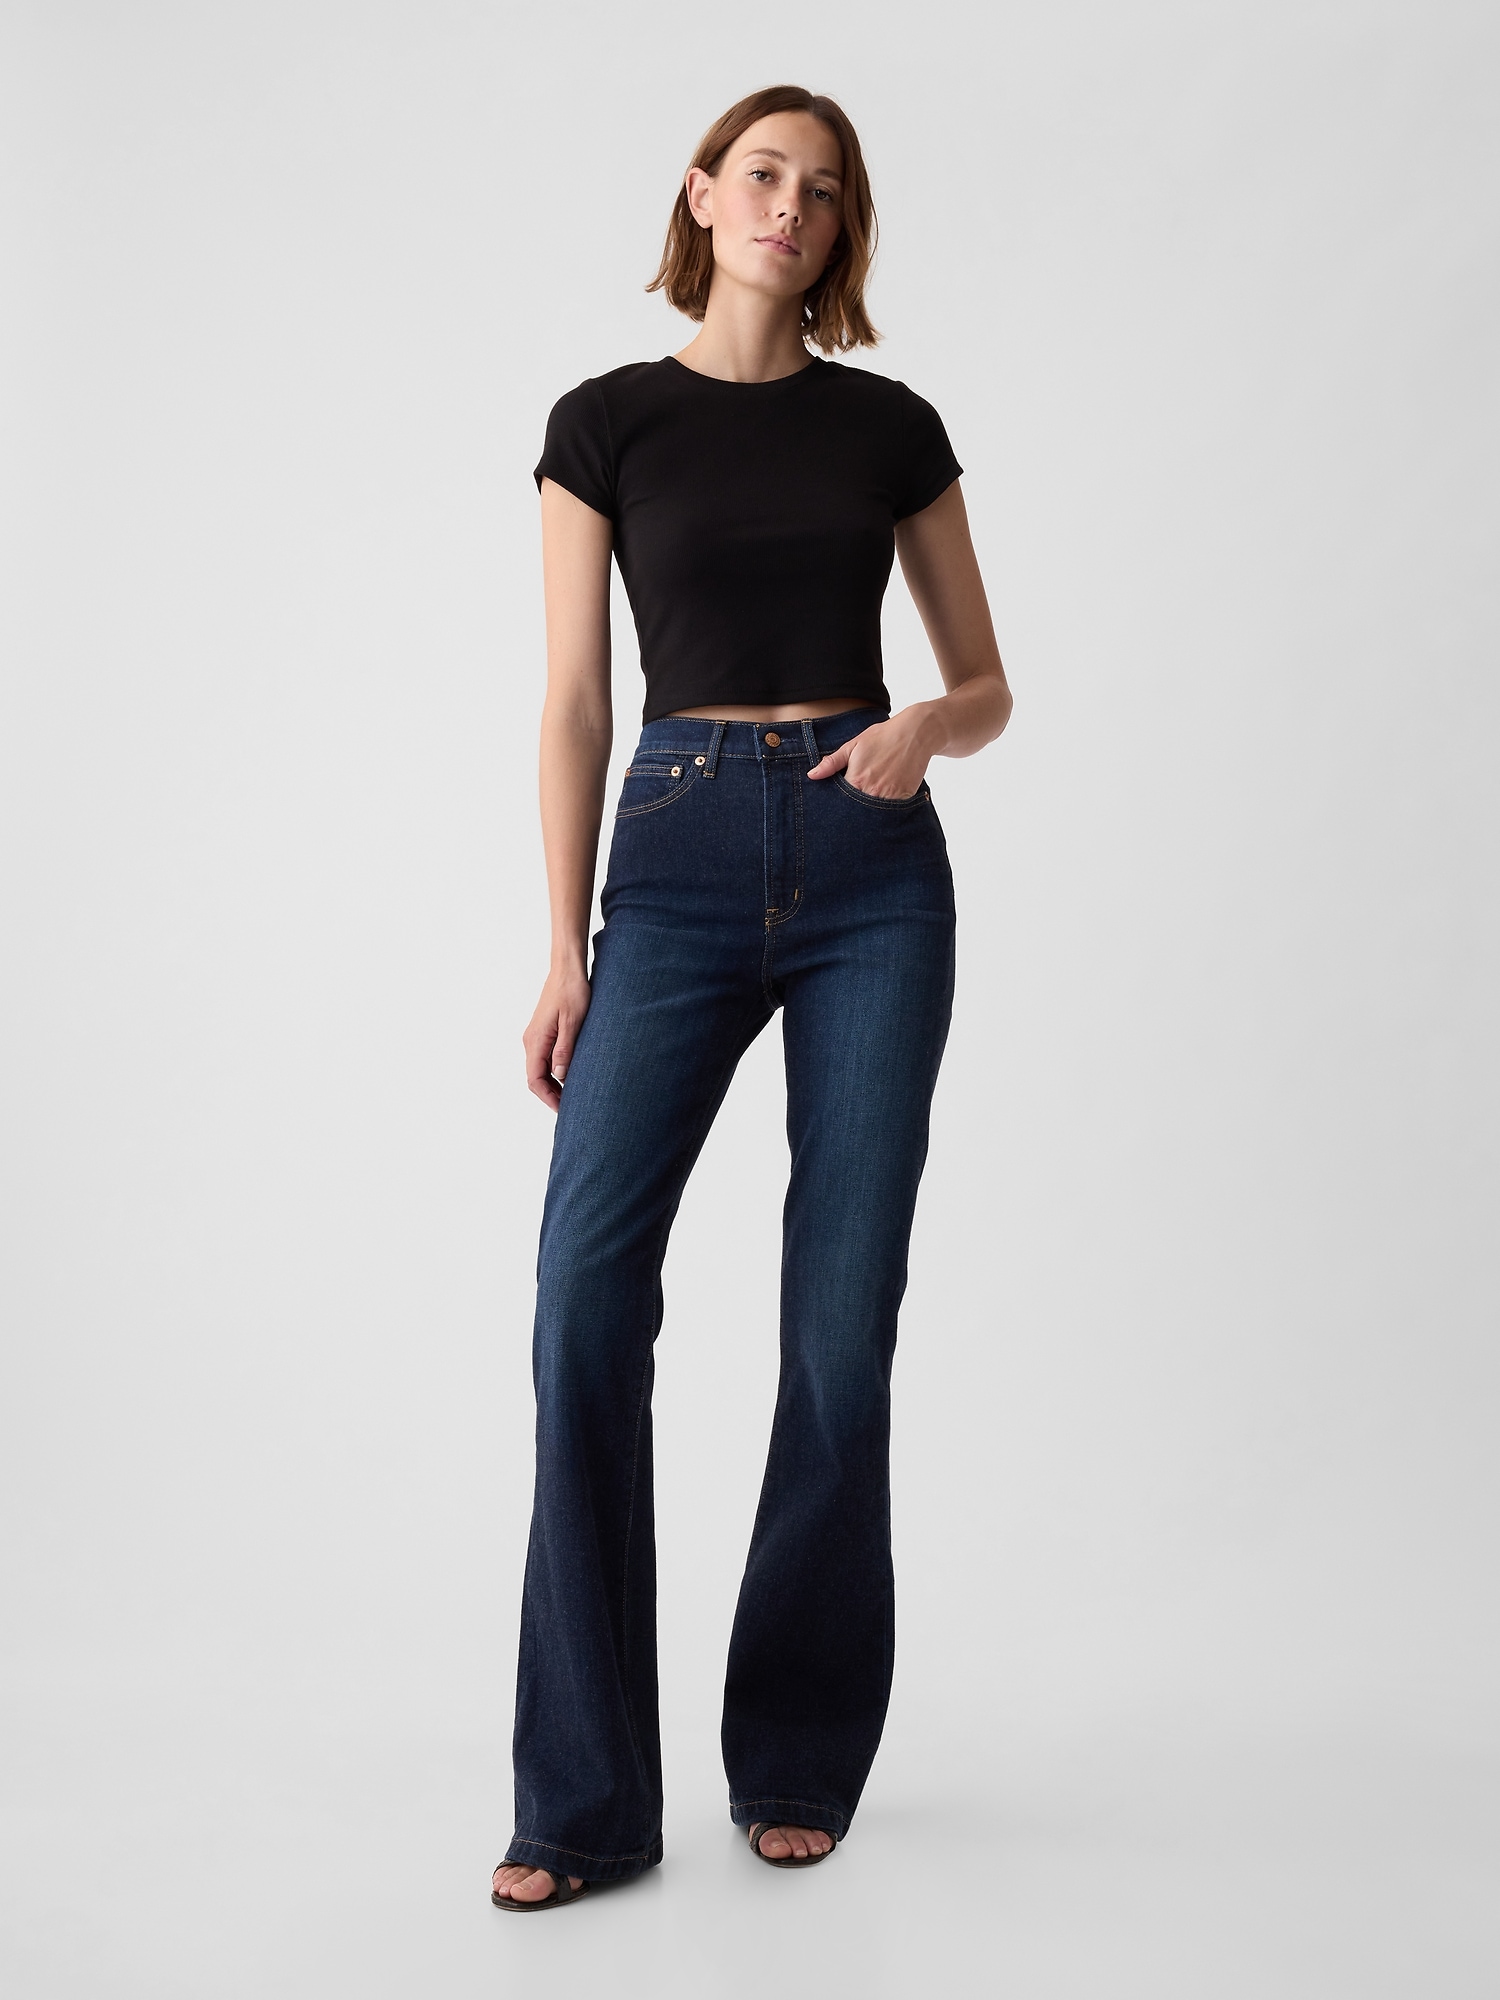 Buy Women Bell Bottom Fit Cropped Length Dark Black Jeans - Global